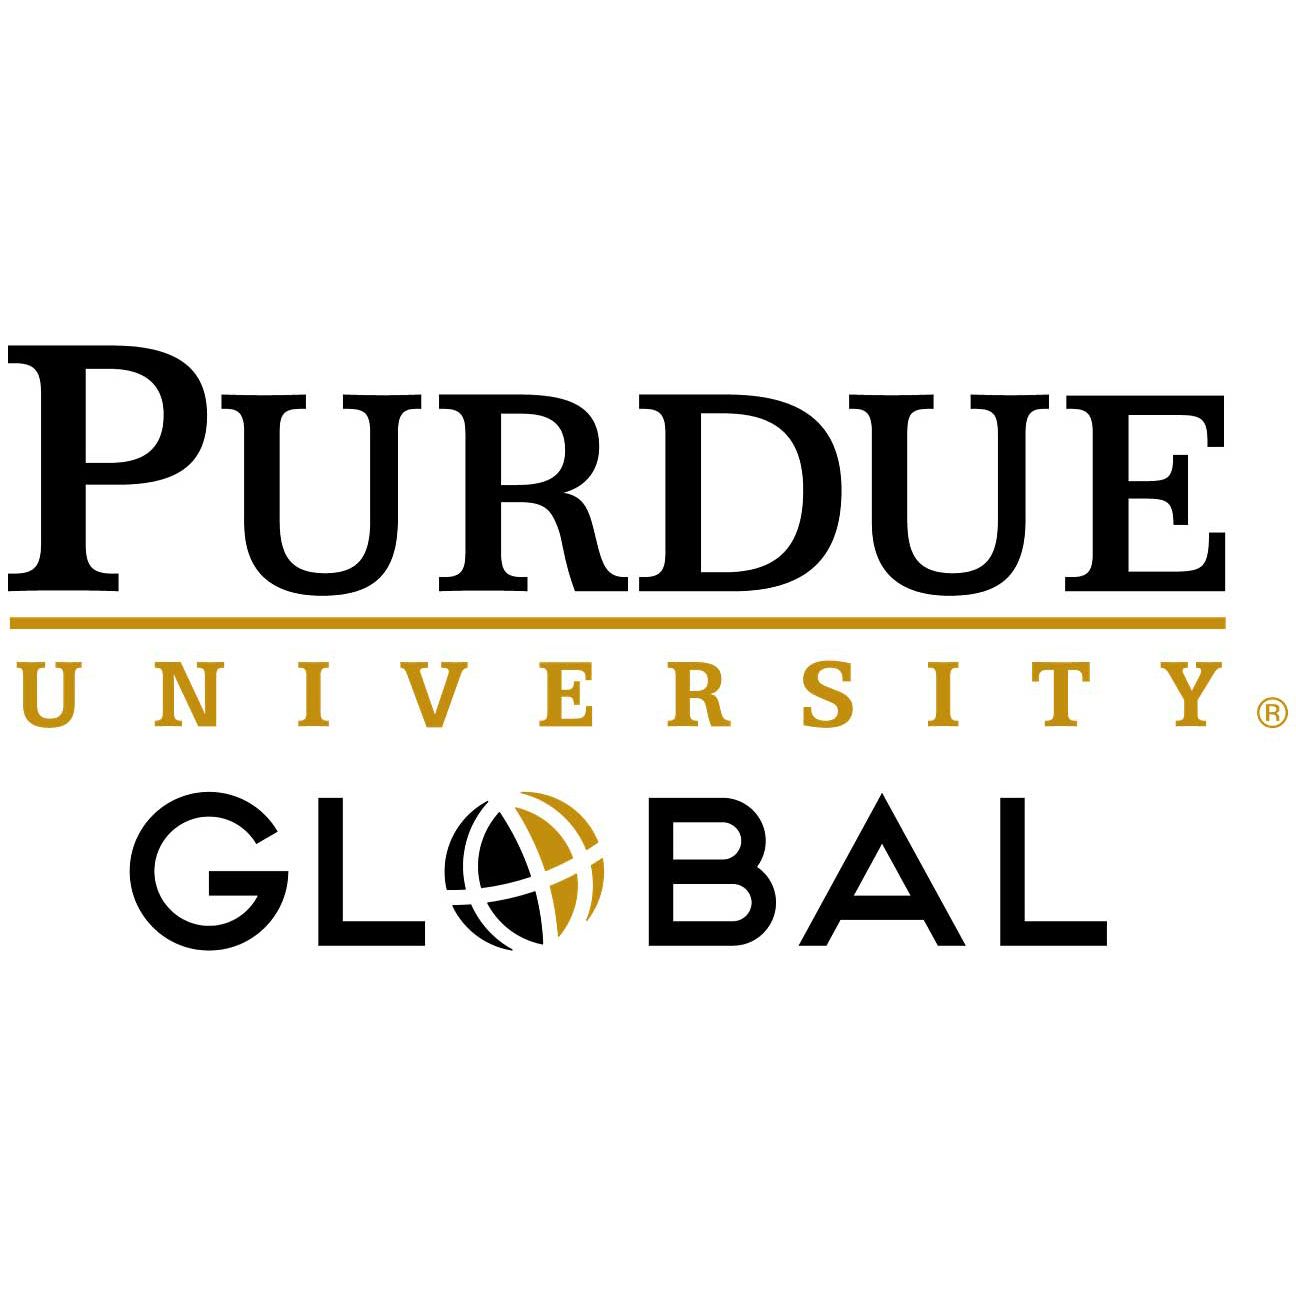 purdue university global logo